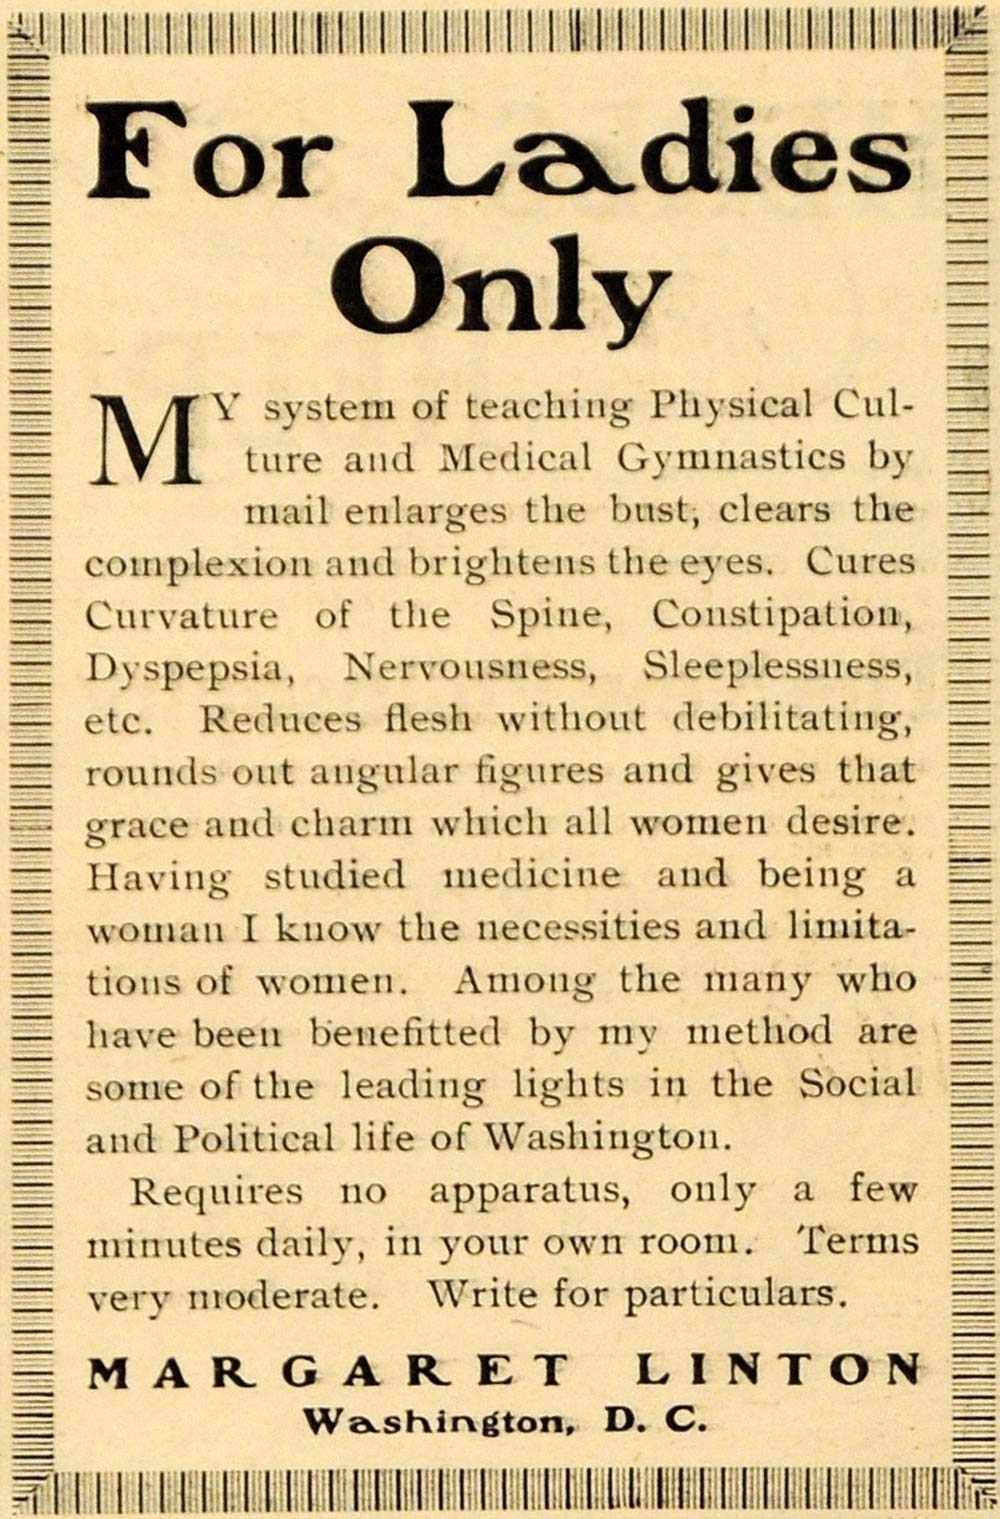 1903 Ad Margaret Linton Physical Culture & Gymnastics - ORIGINAL ARG1